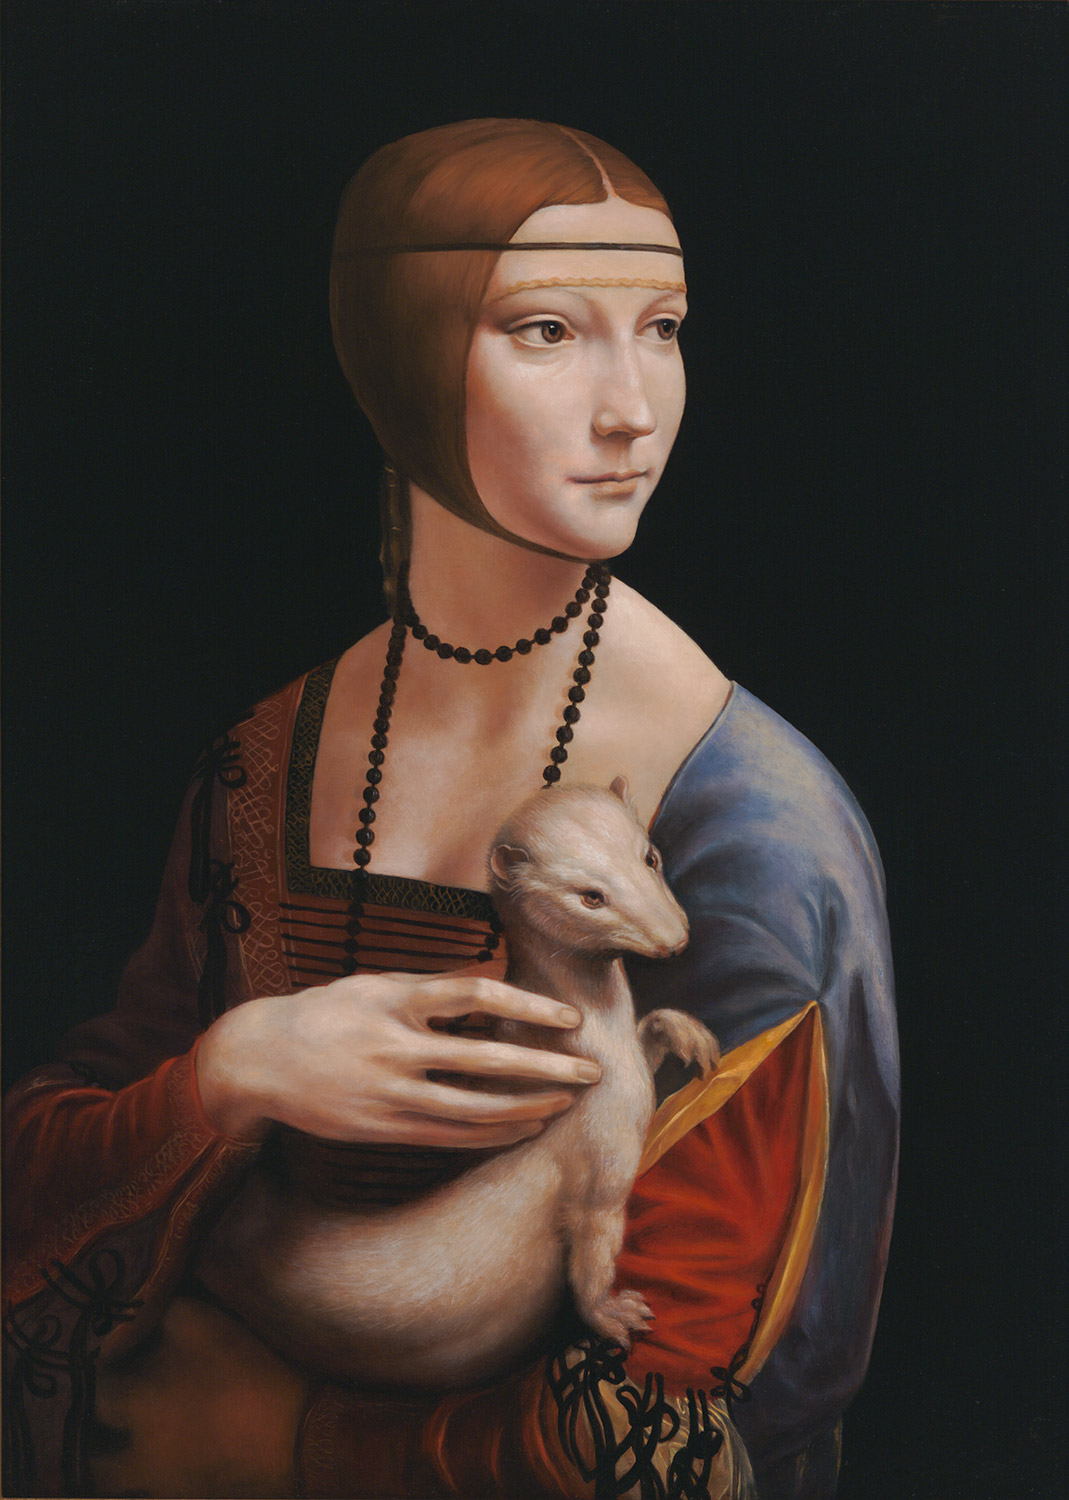 Master Copy of Leonardo da Vinci's Lady with an Ermine